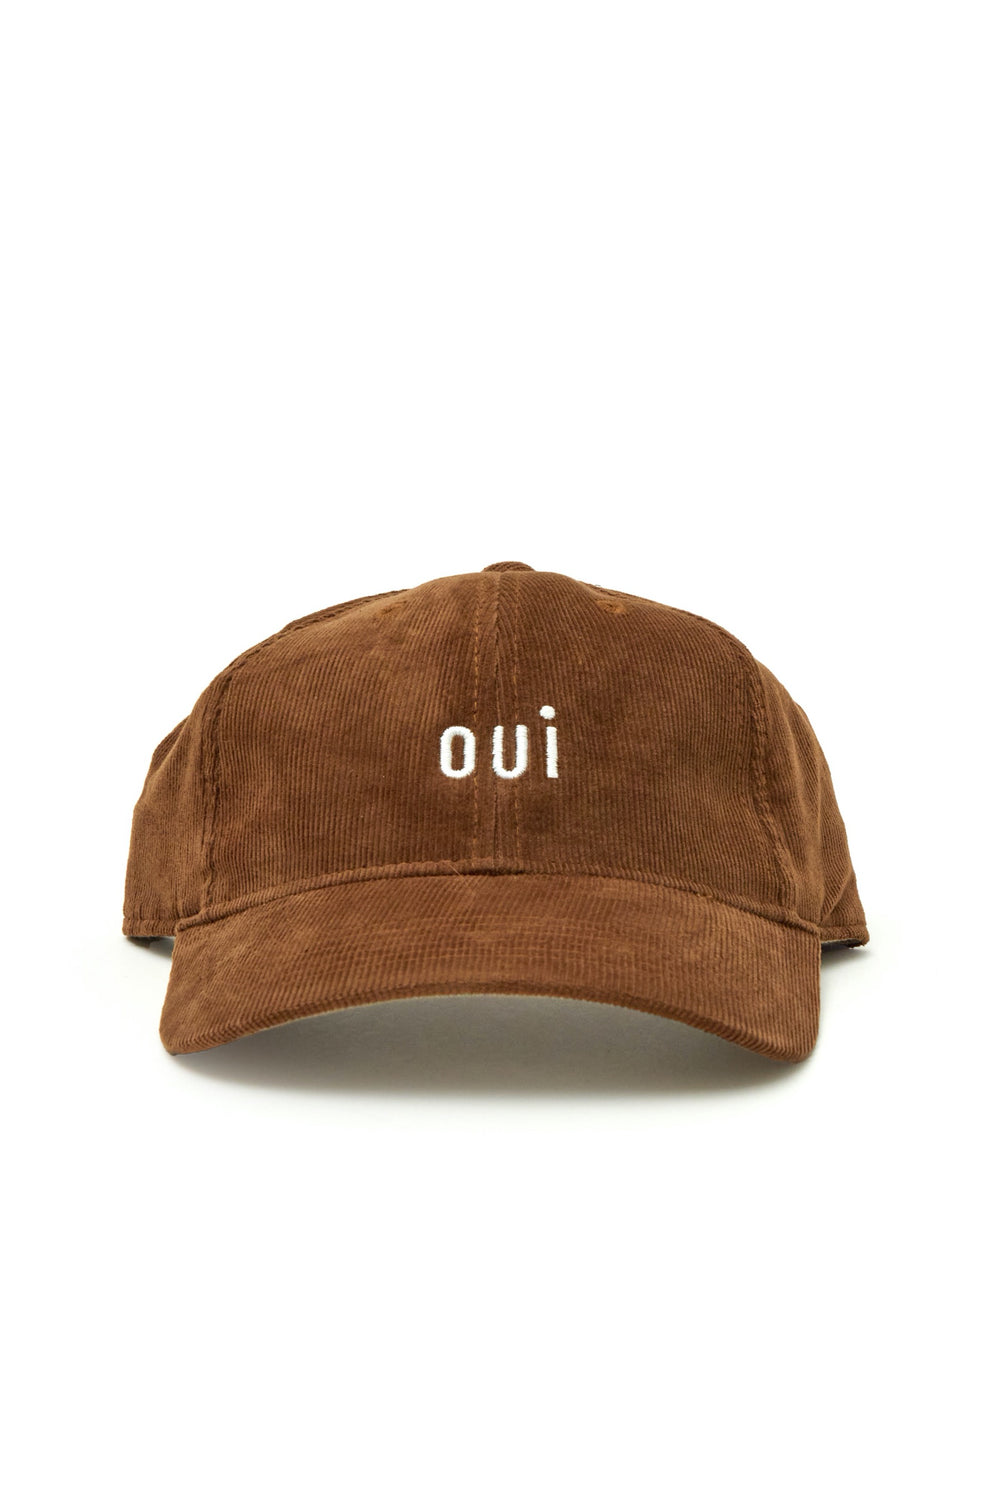 Tawny Corduroy Oui Hat